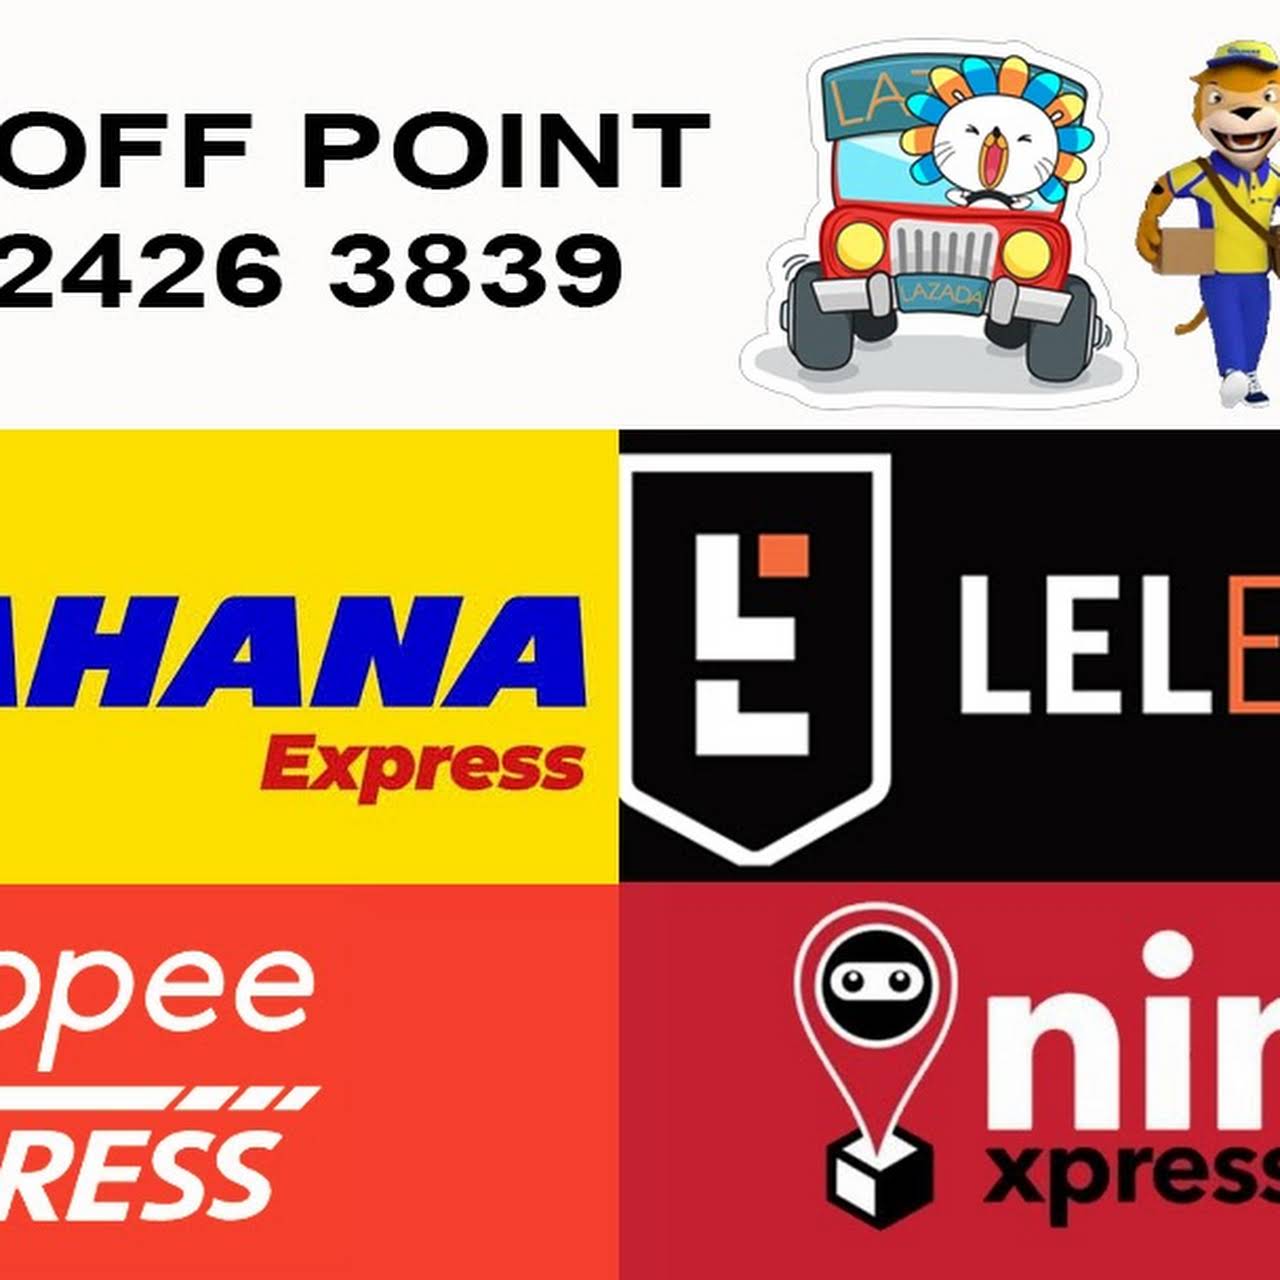 Shopee express drop off point